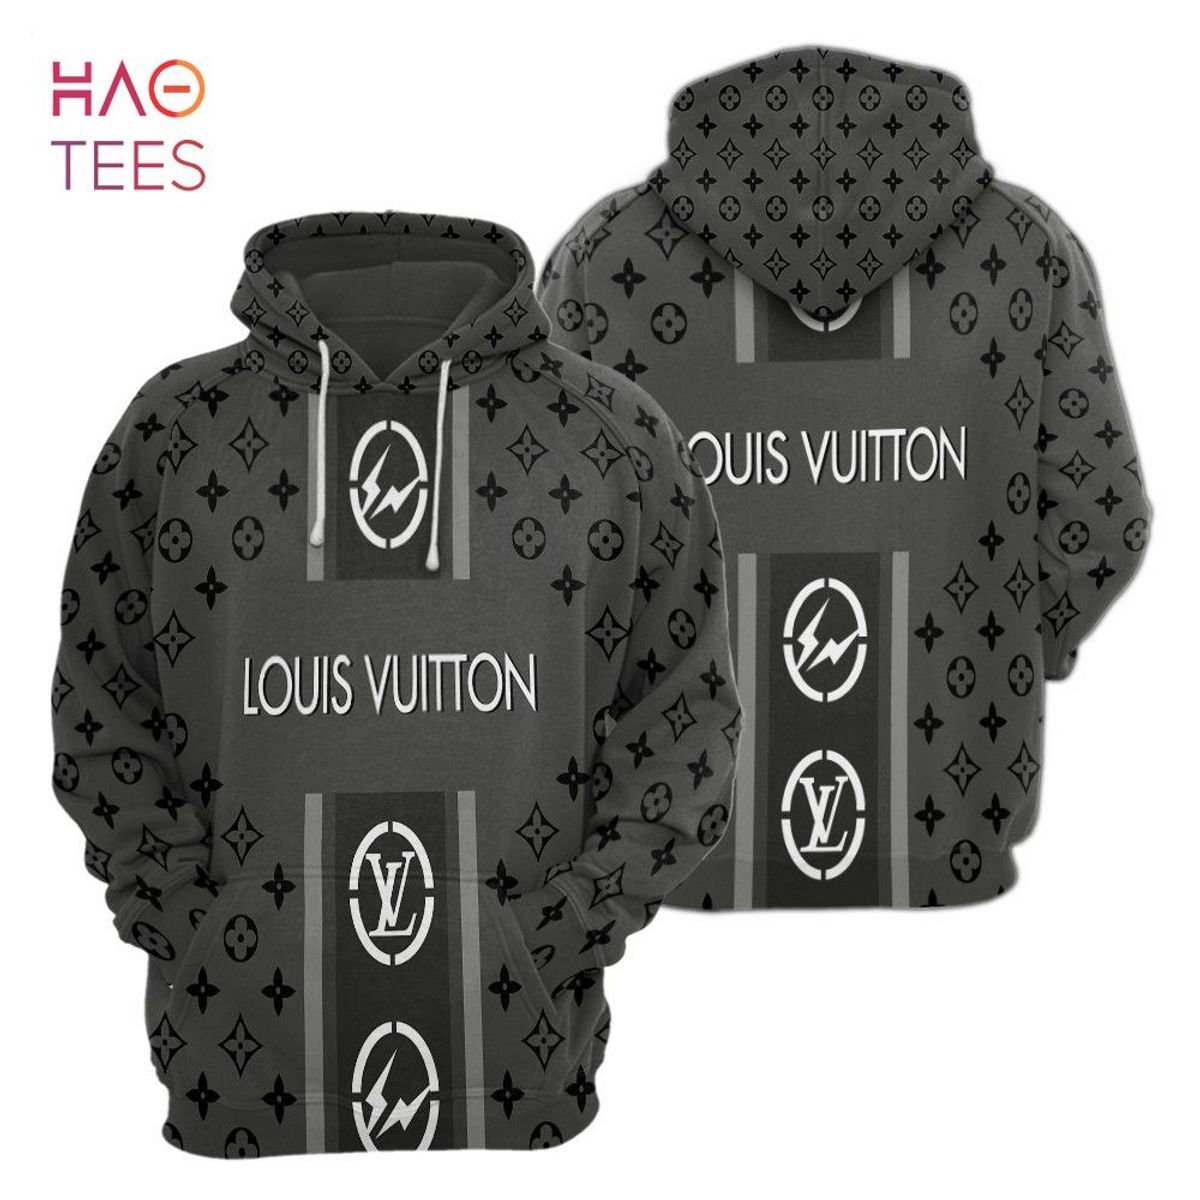 TRENDING] Louis Vuitton Luxury Brand Hoodie And Pants Pod Design